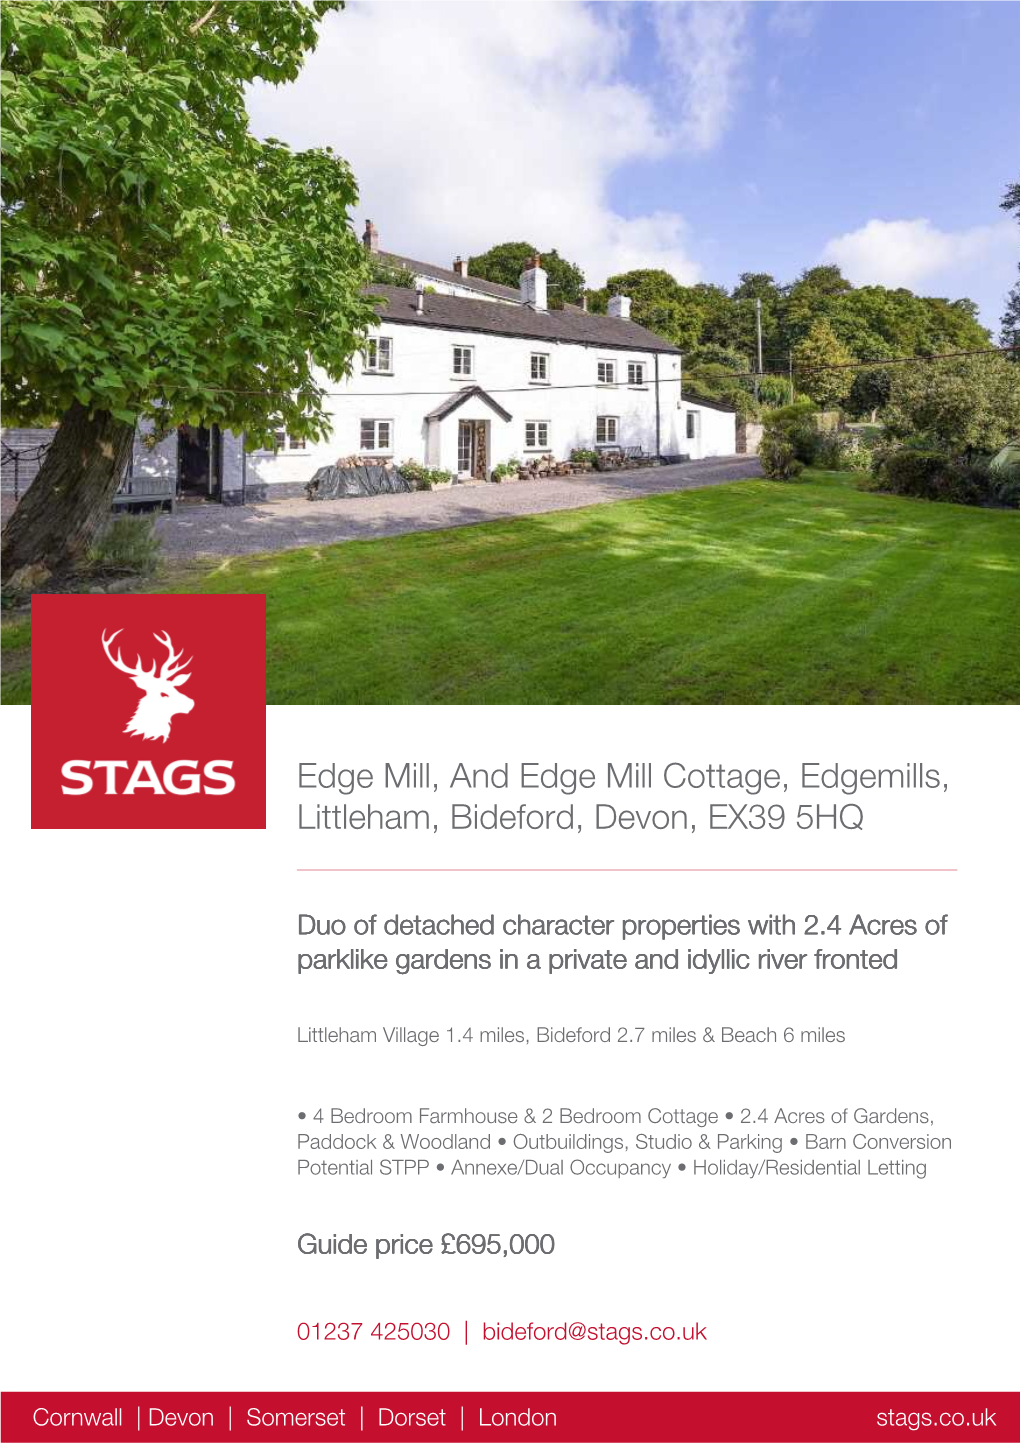 Edge Mill, and Edge Mill Cottage, Edgemills, Littleham, Bideford, Devon, EX39 5HQ